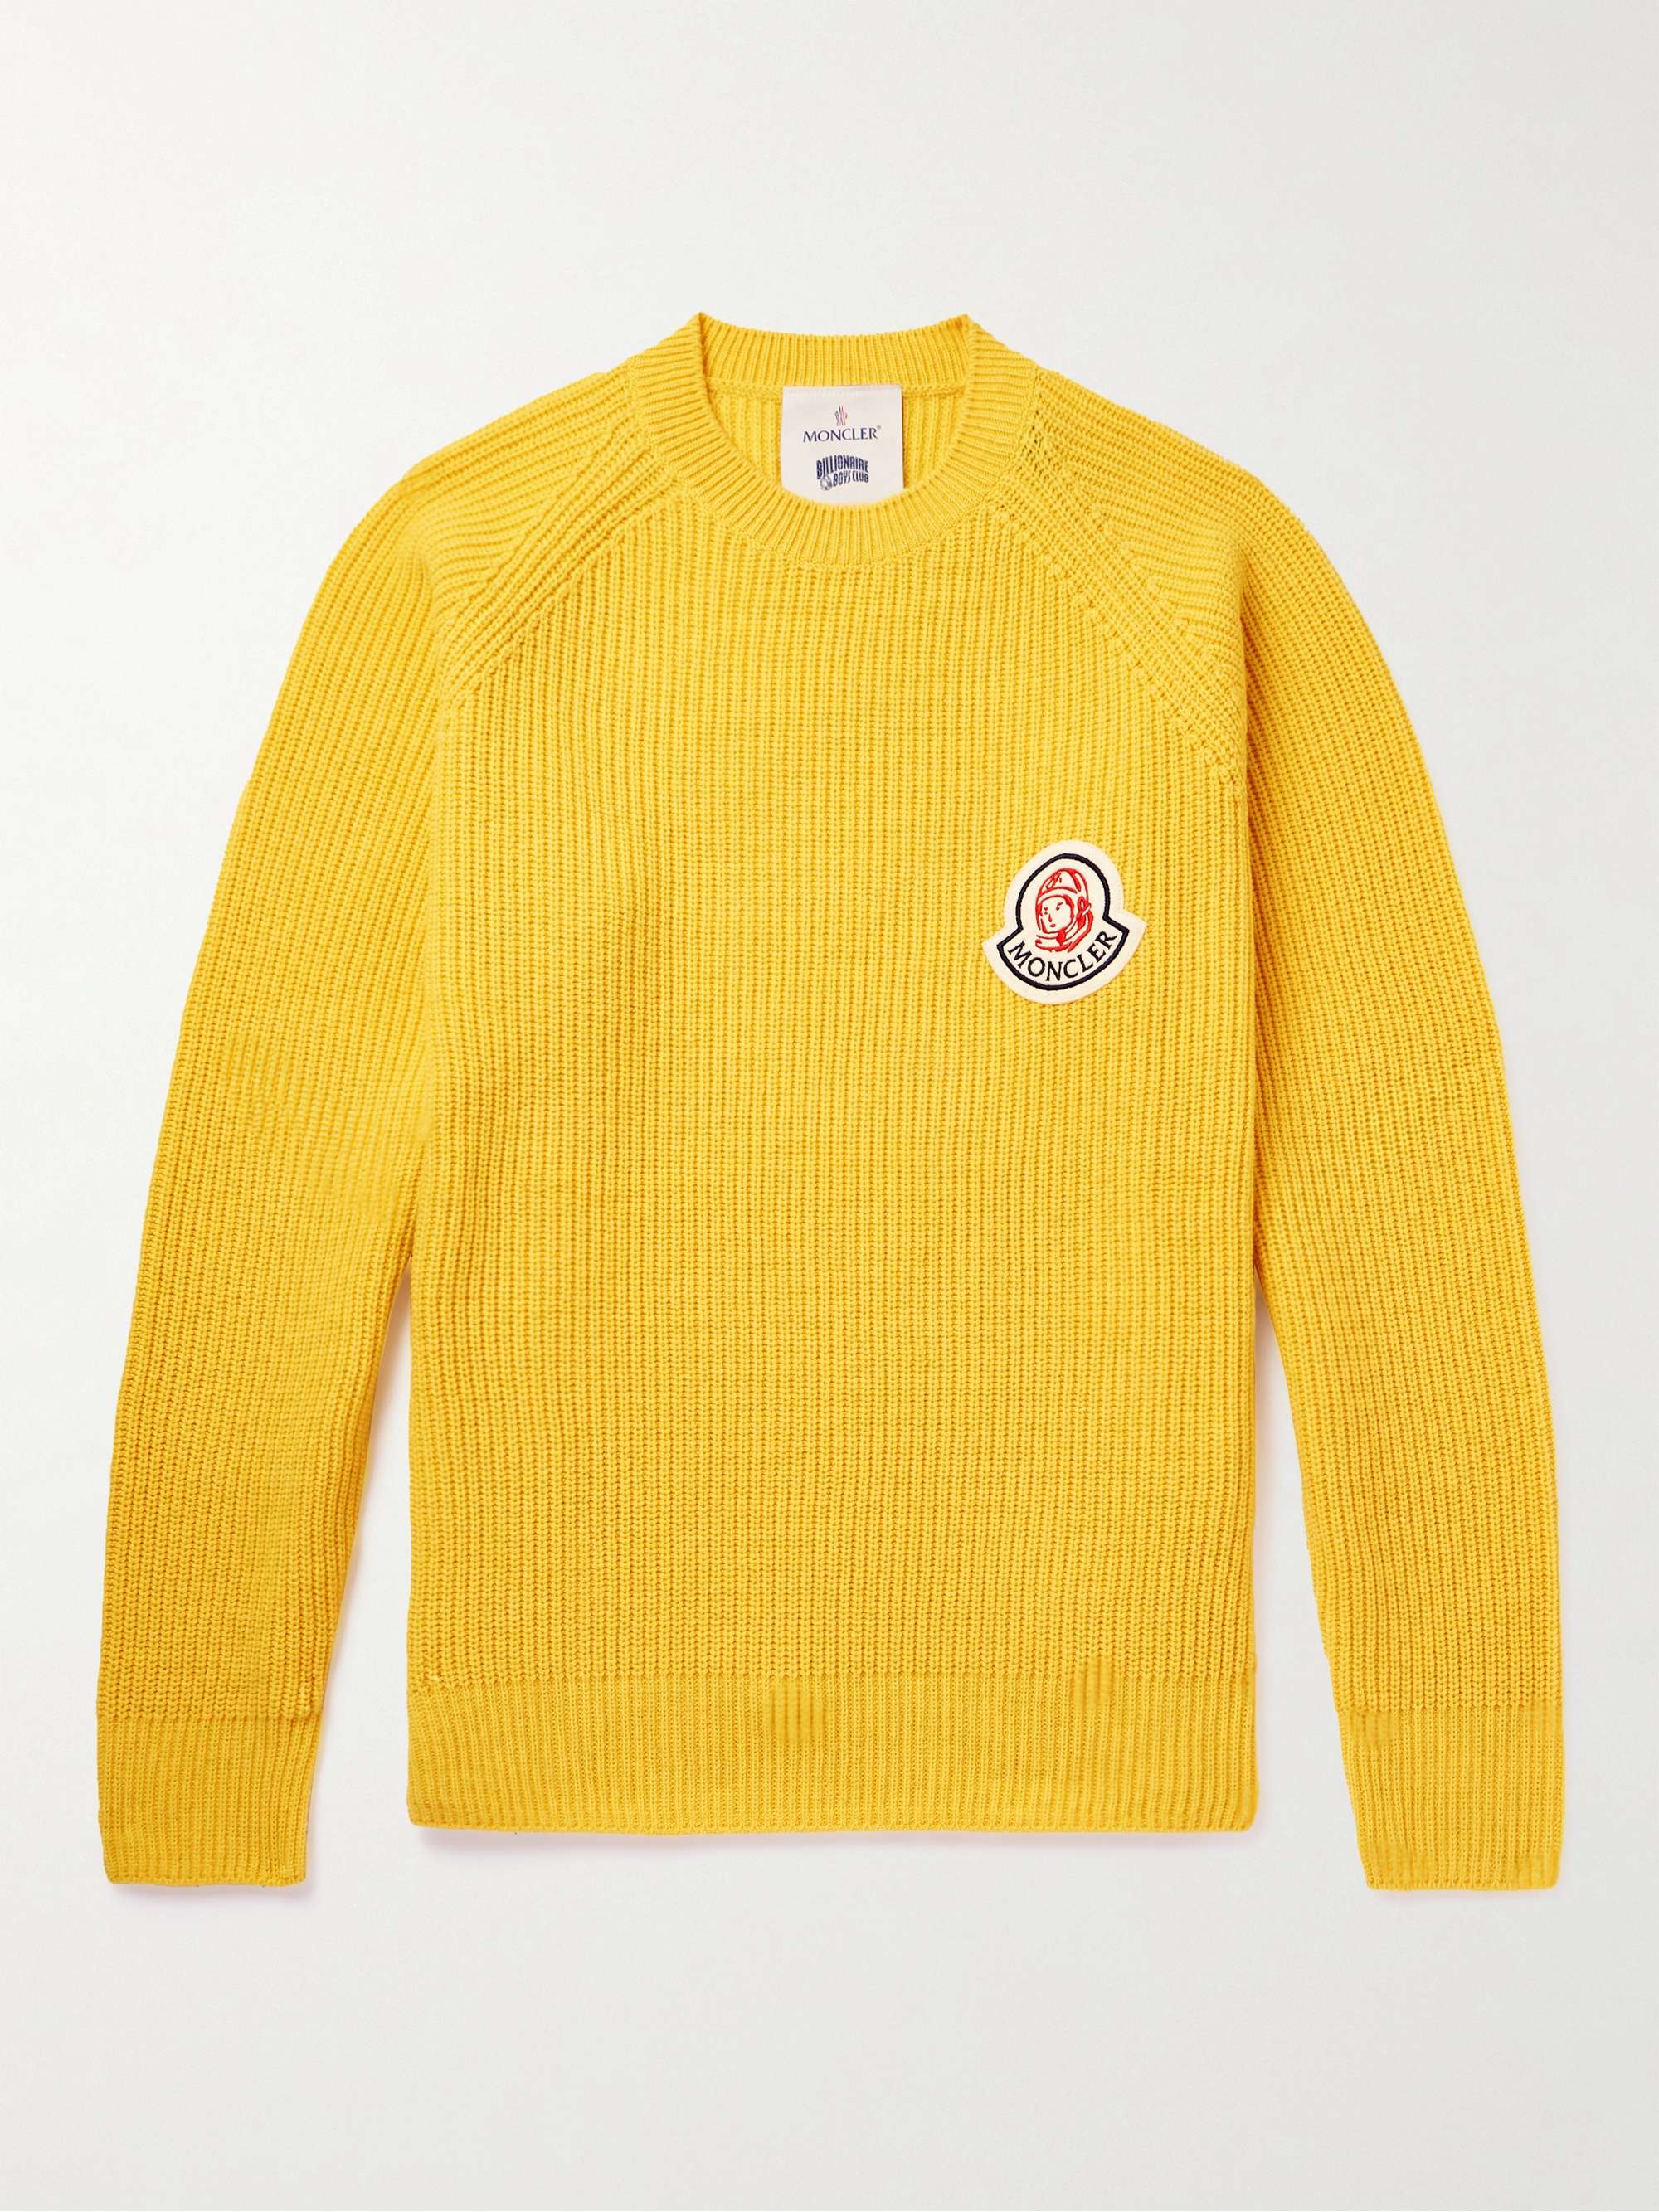 MONCLER GENIUS + Billionaire Boys Club Logo-Appliquéd Ribbed Wool and  Cashmere-Blend Sweater for Men | MR PORTER